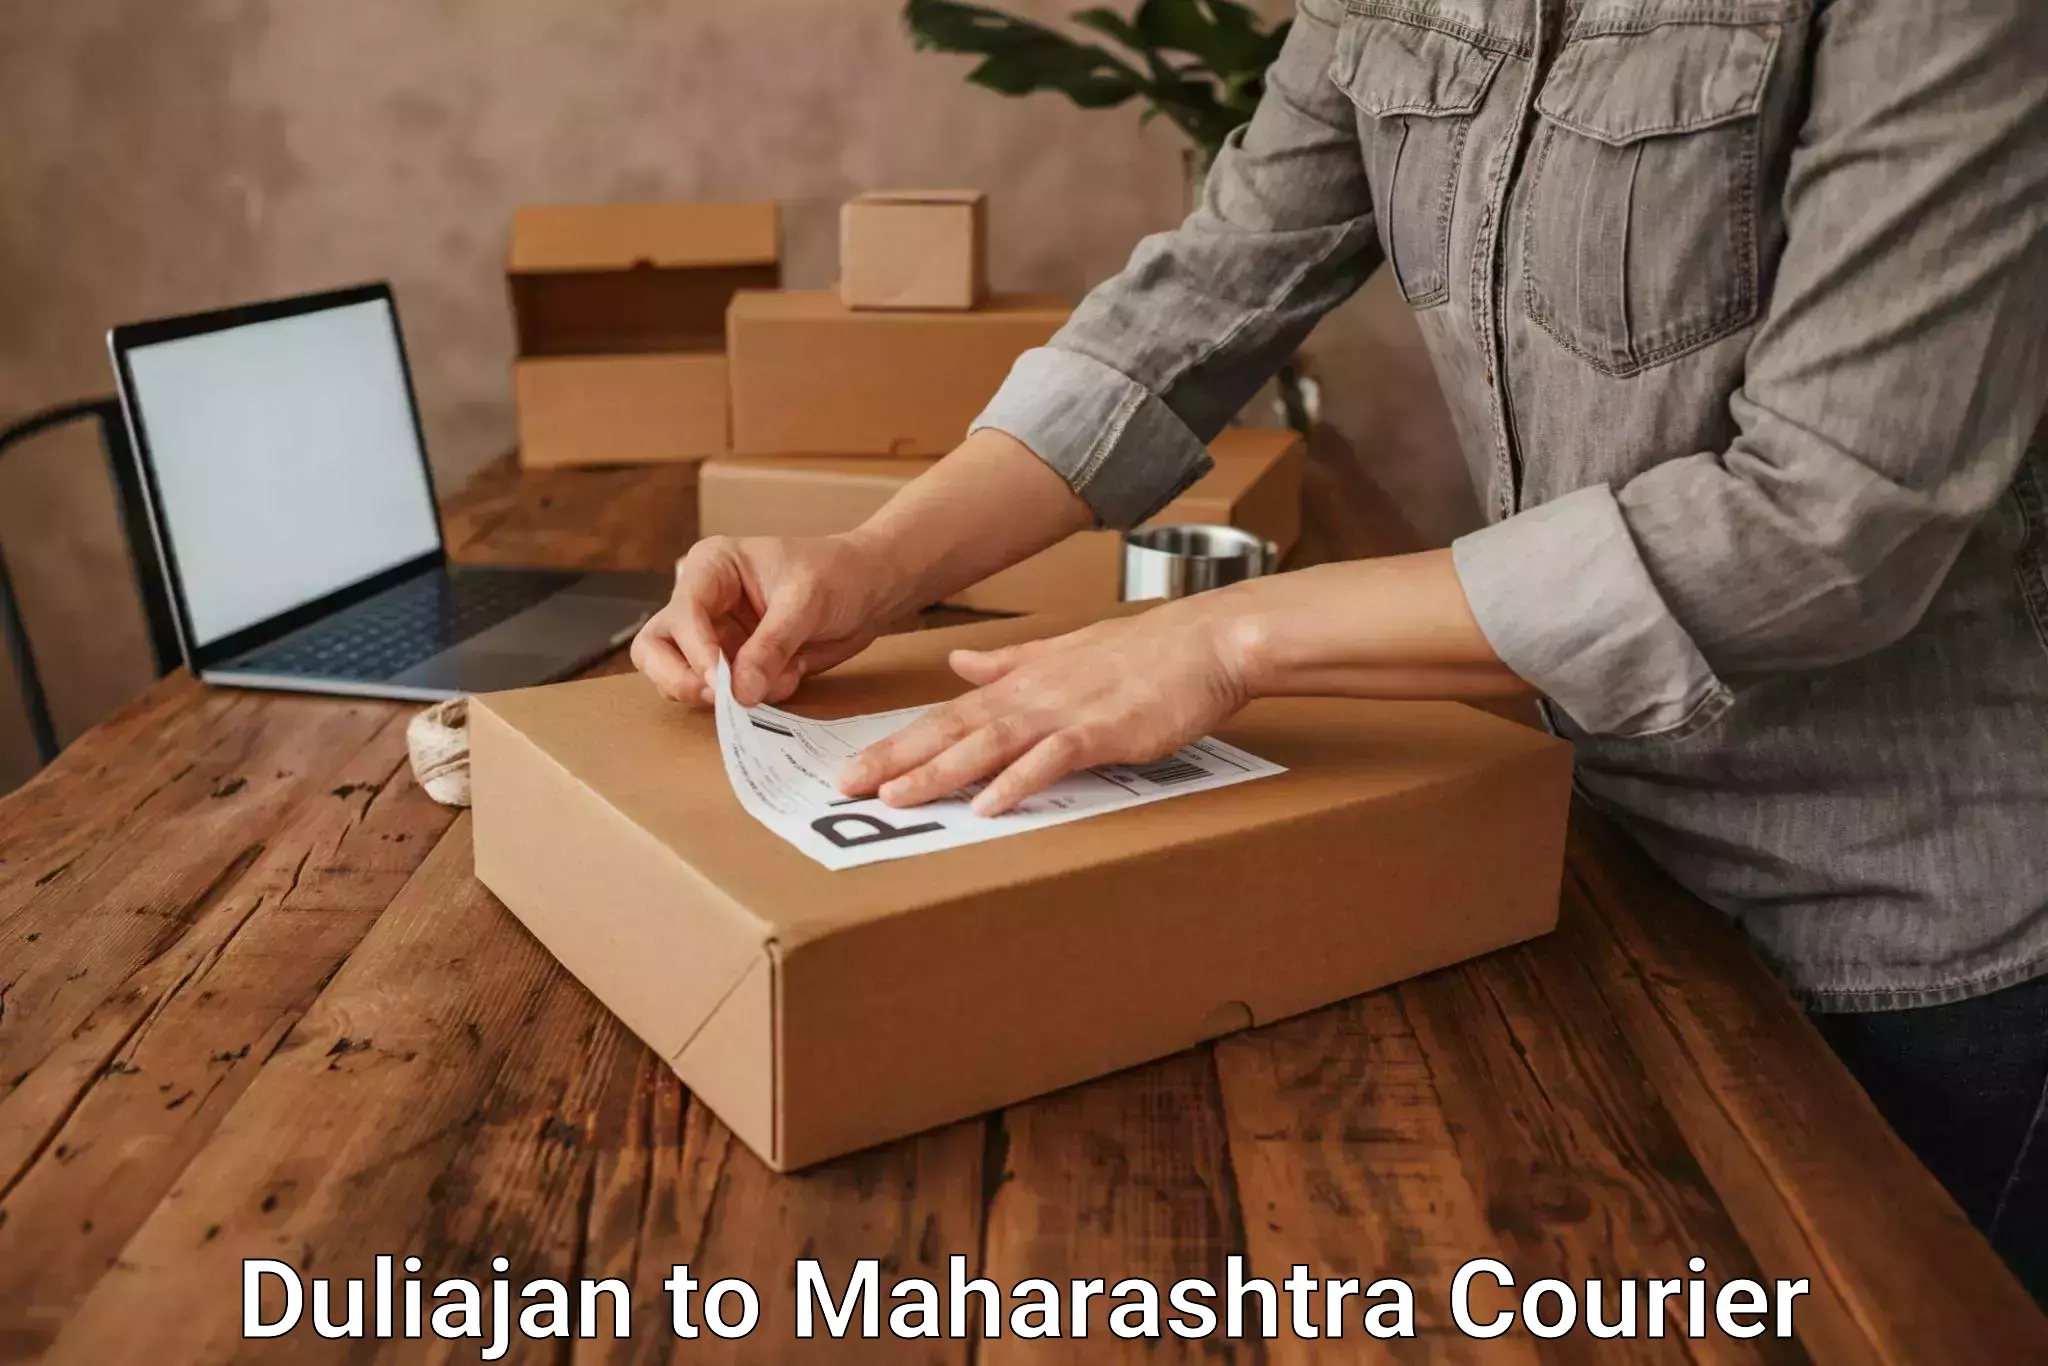 Courier service efficiency Duliajan to Ahmednagar